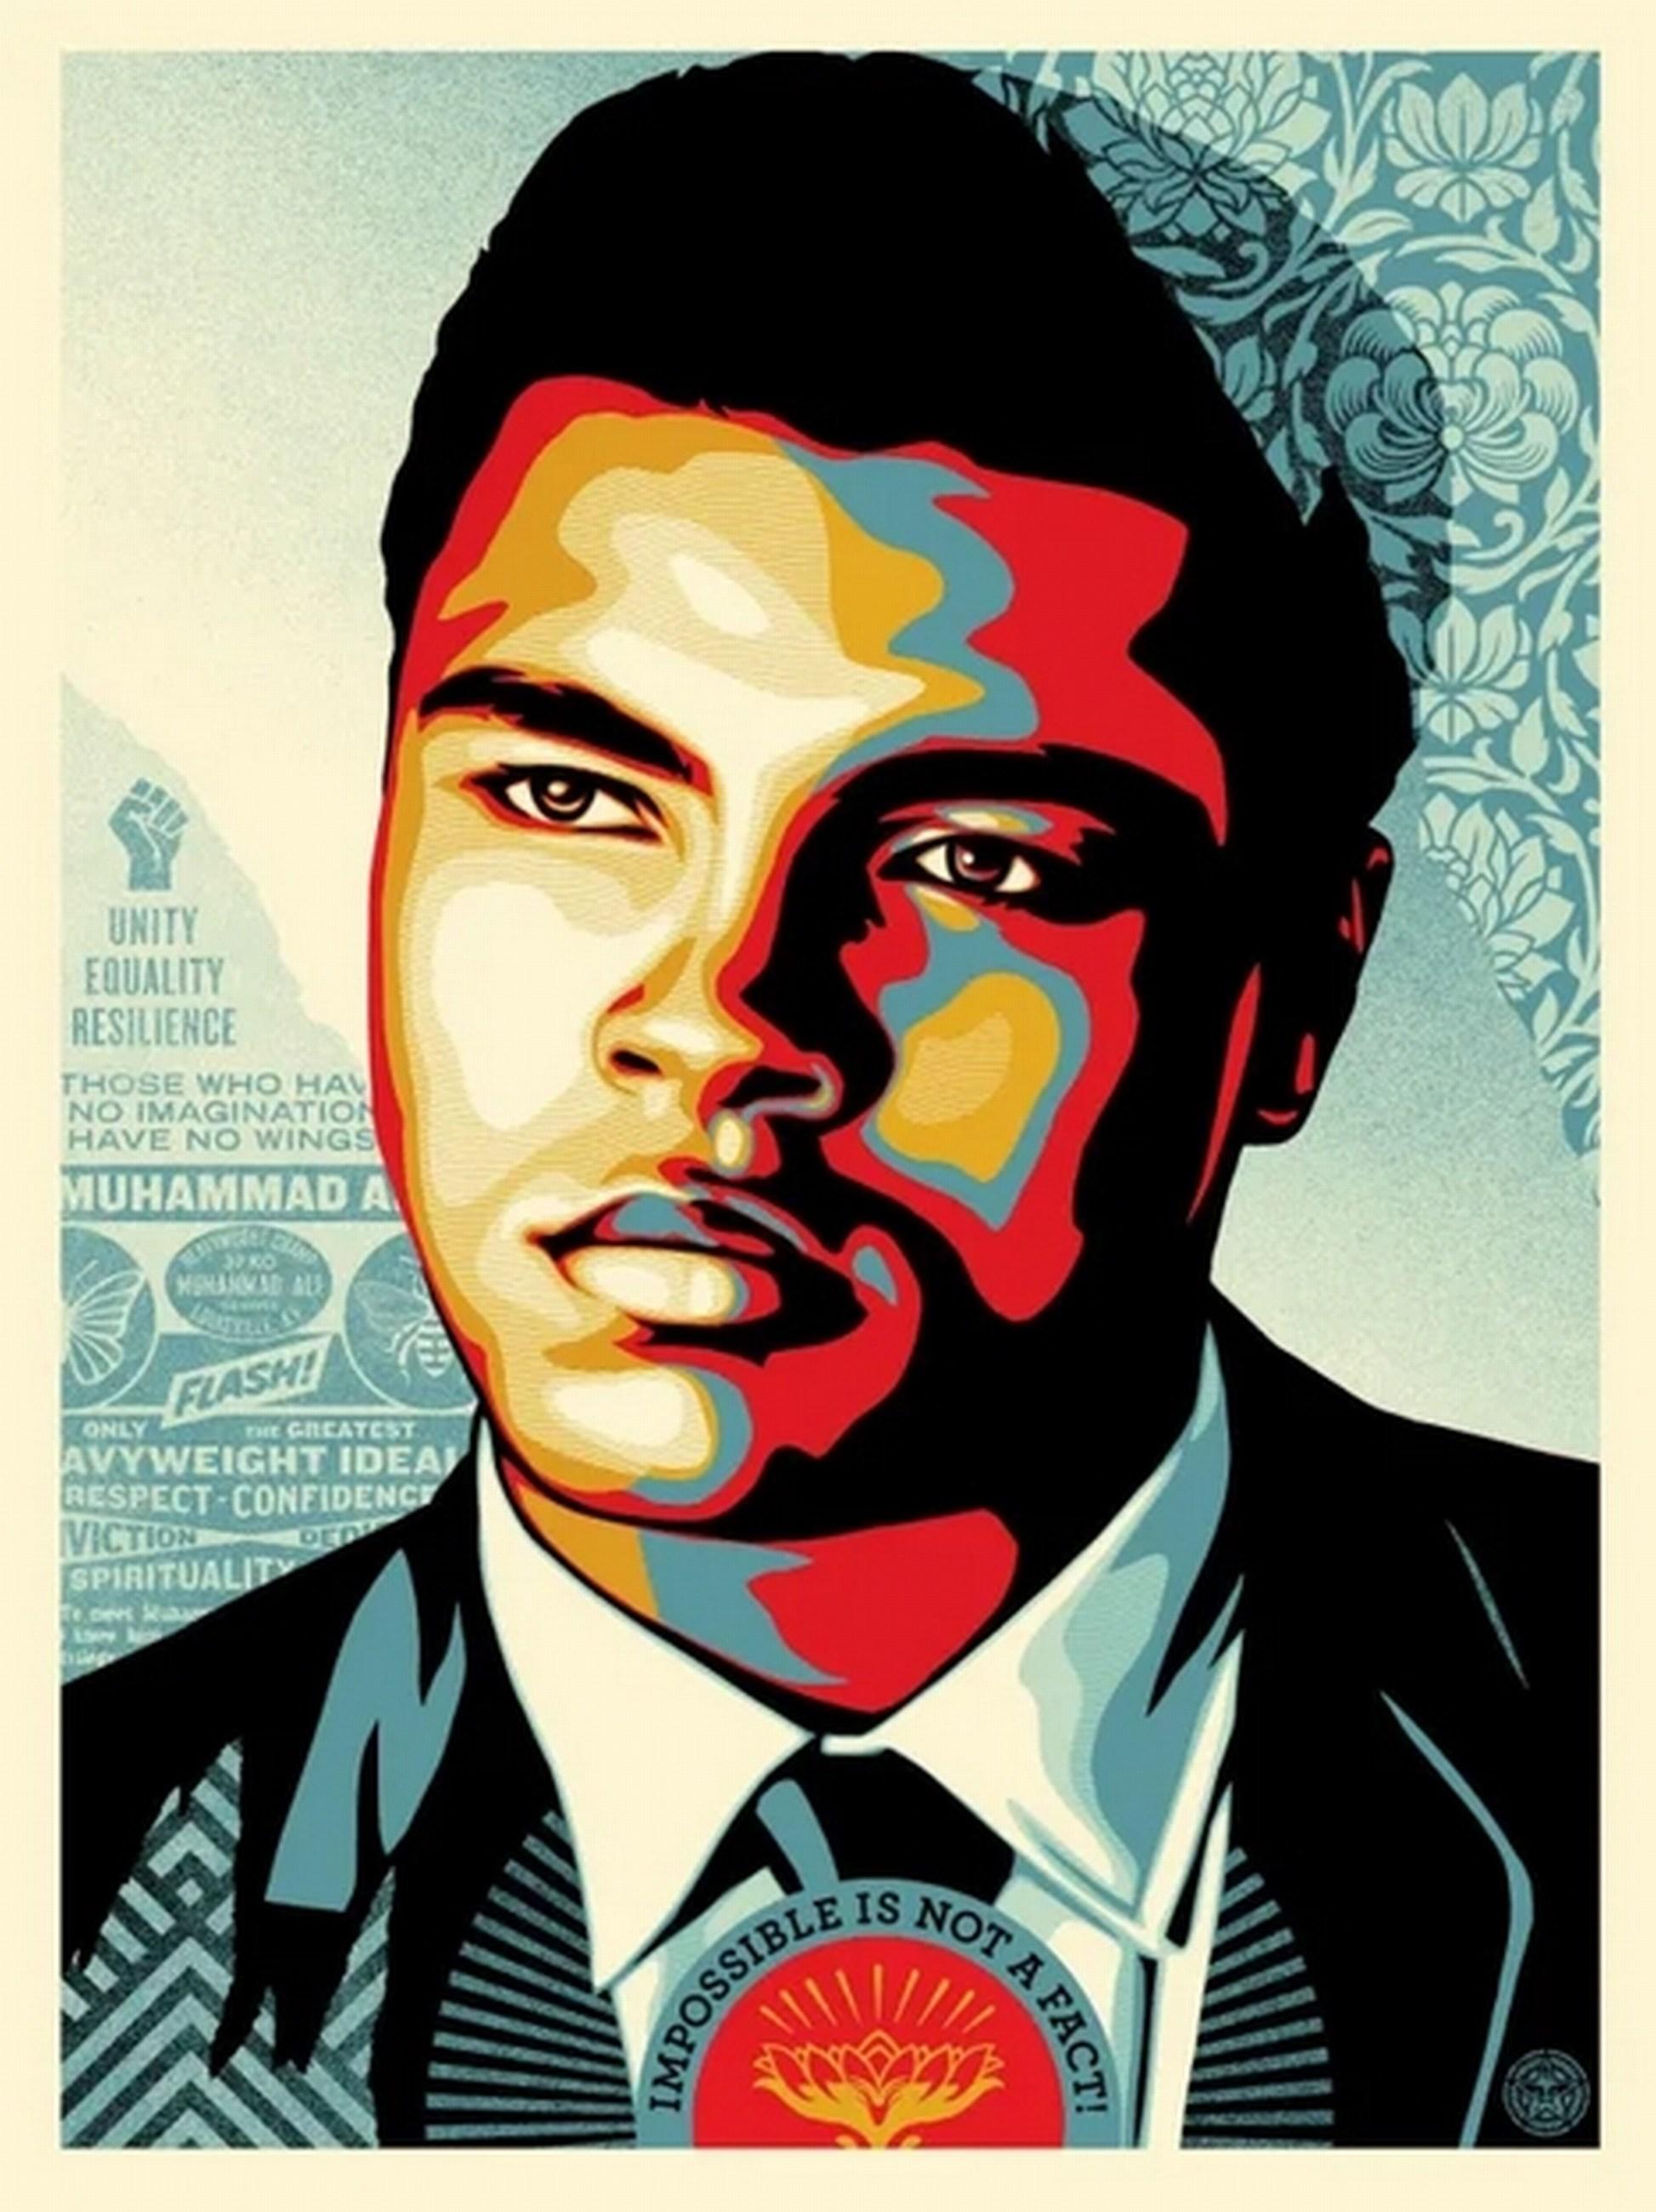 Shepard Fairey Portrait Print - Muhammad Ali – Heavyweight Ideals (Iconic, Activist, Civil Rights, ~50% OFF)